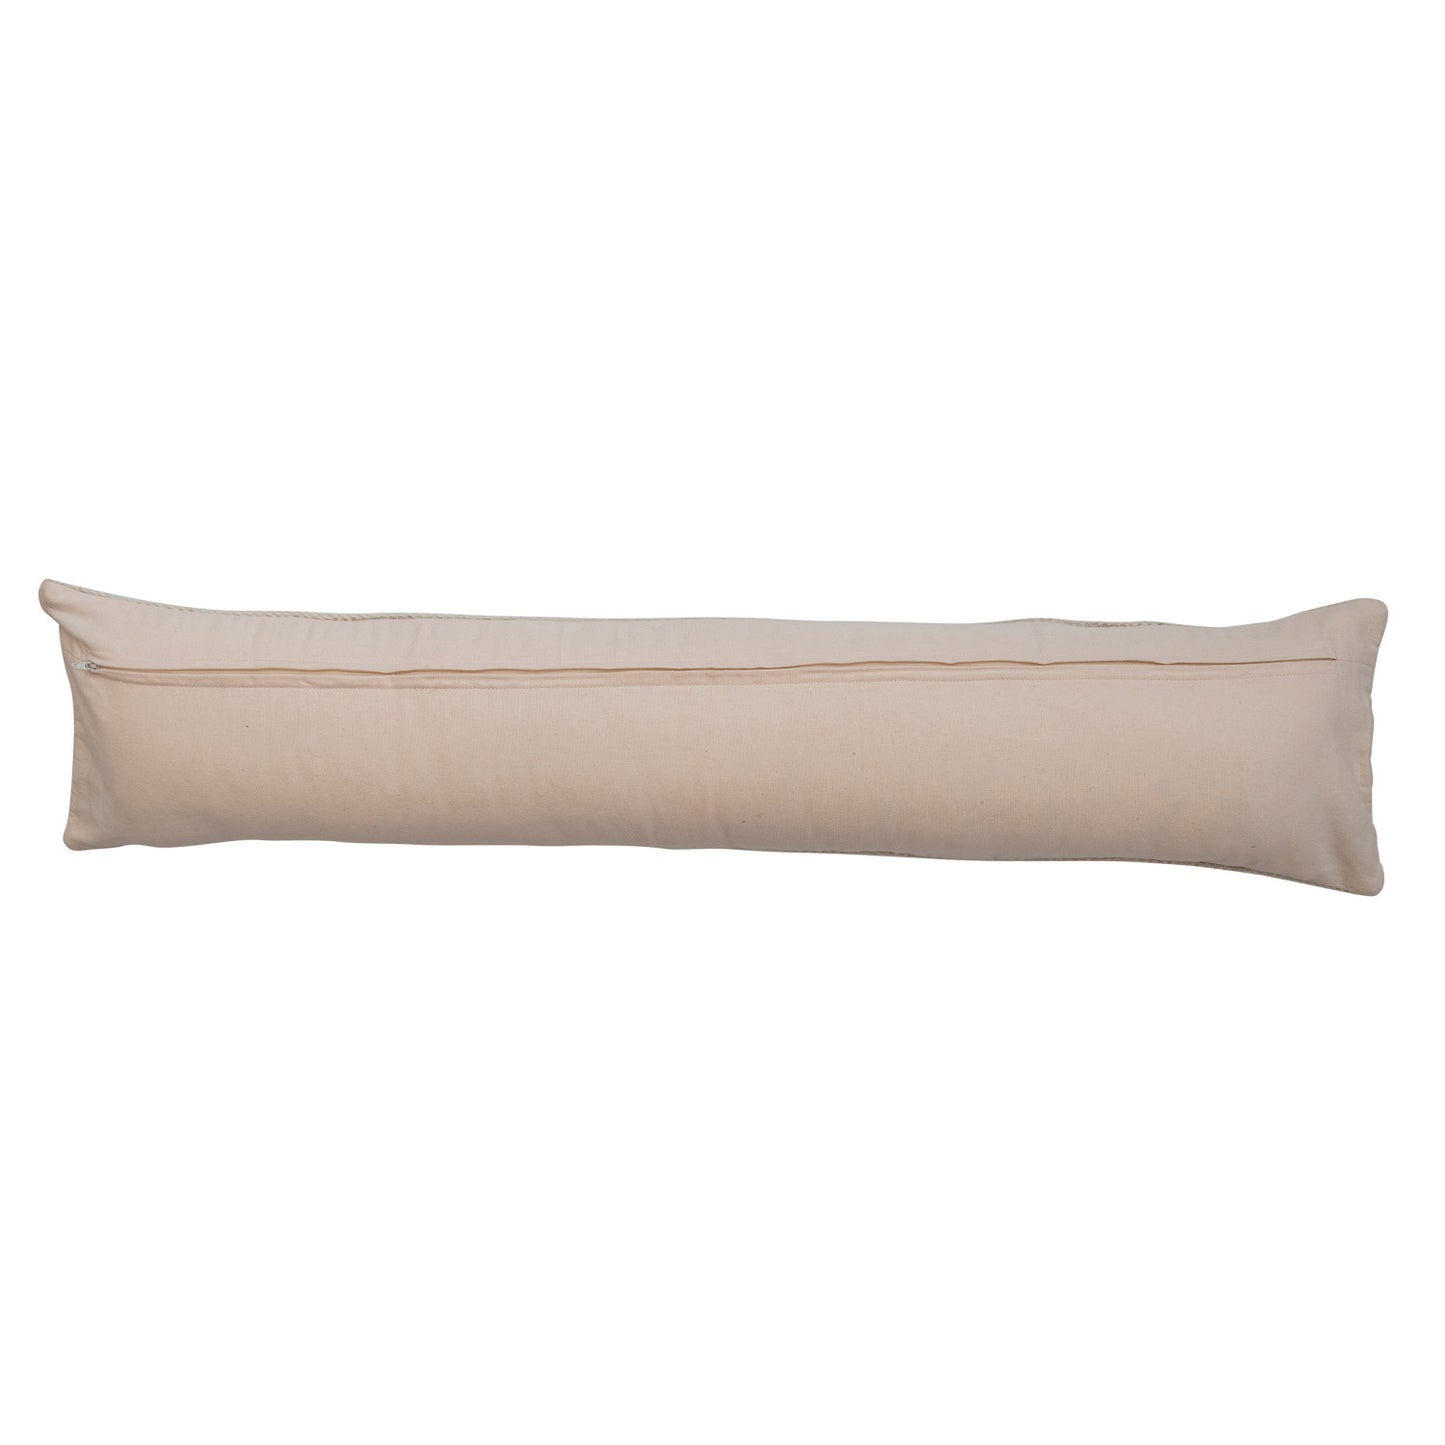 Woven Wool Blend Kilim Lumbar Pillow, Multi Color